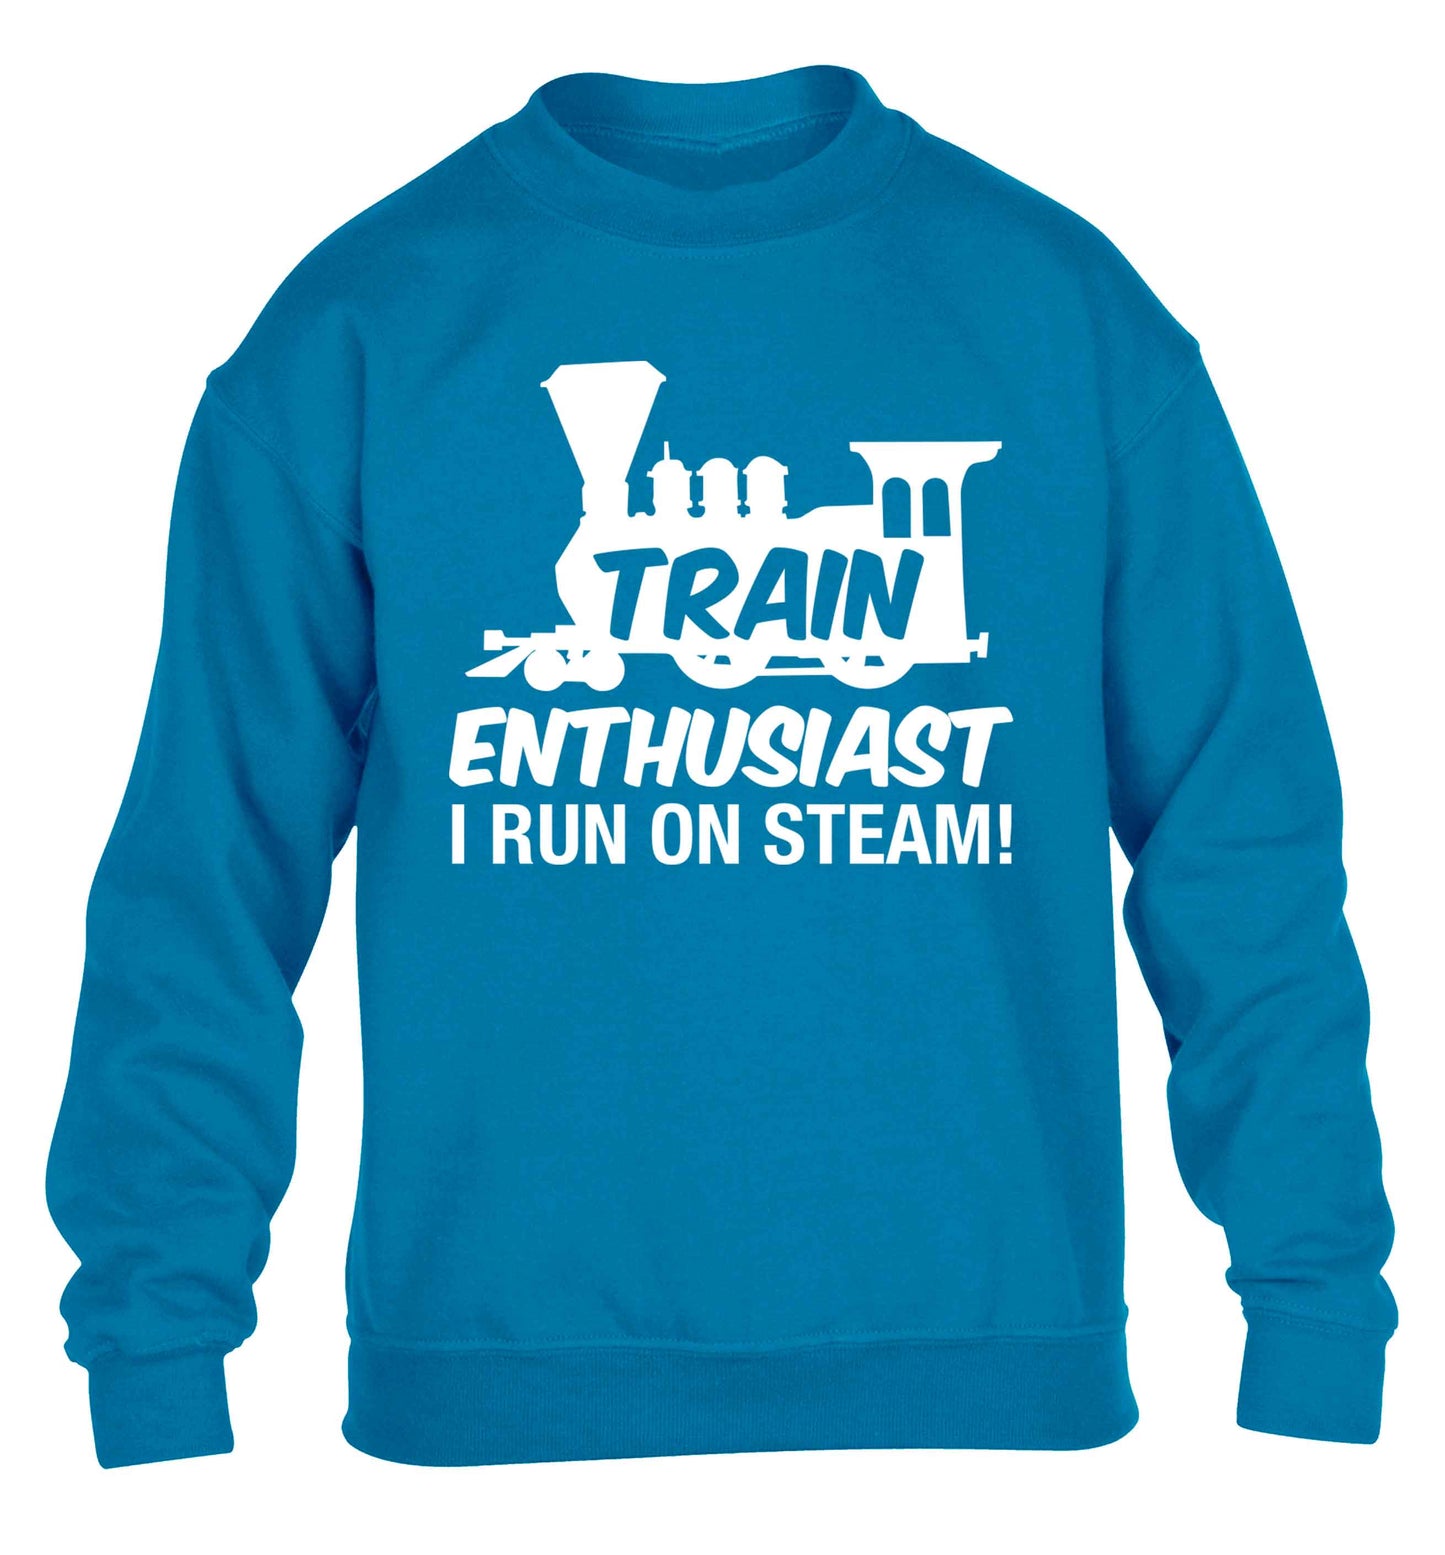 Train enthusiast I run on steam children's blue sweater 12-13 Years